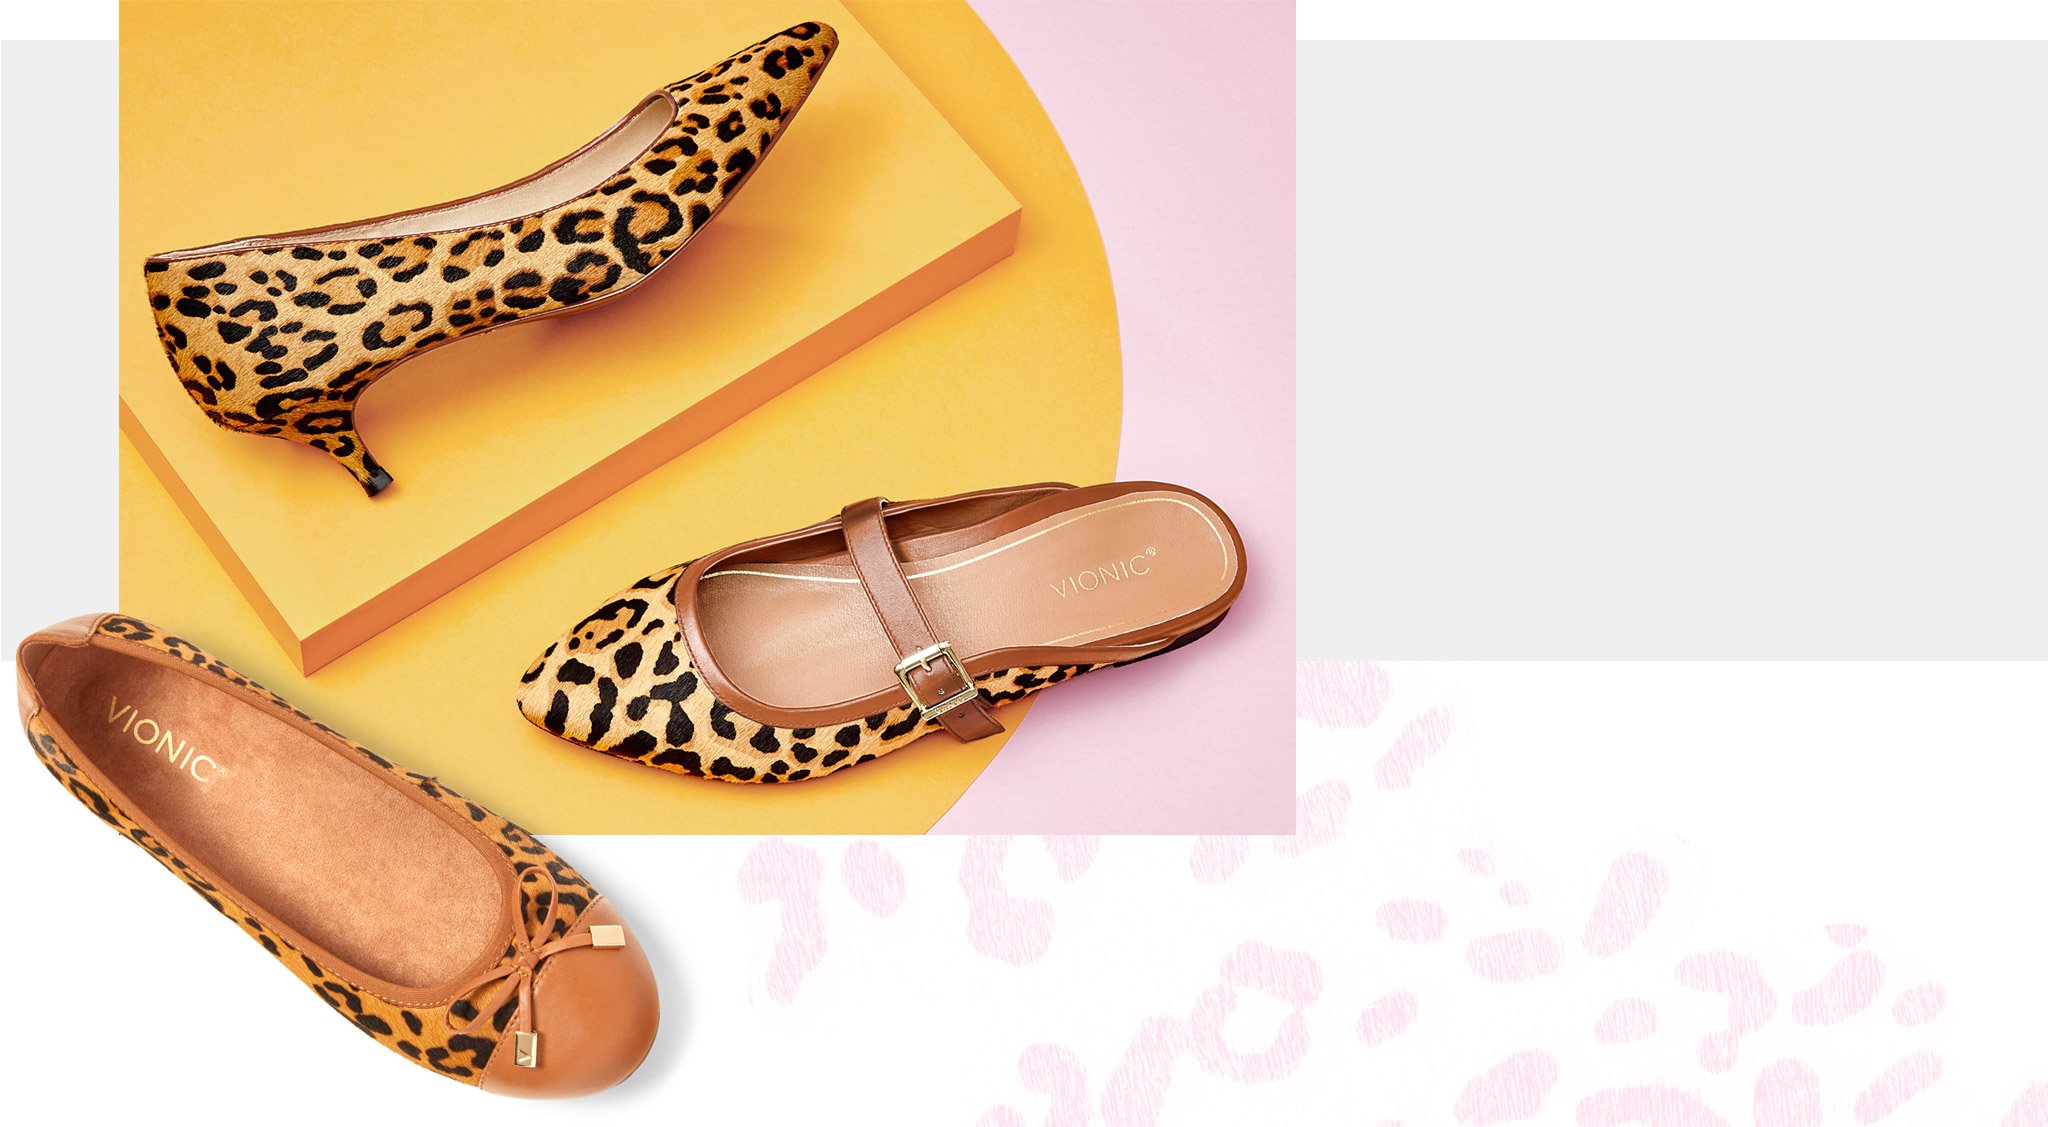 vionic sandals leopard print